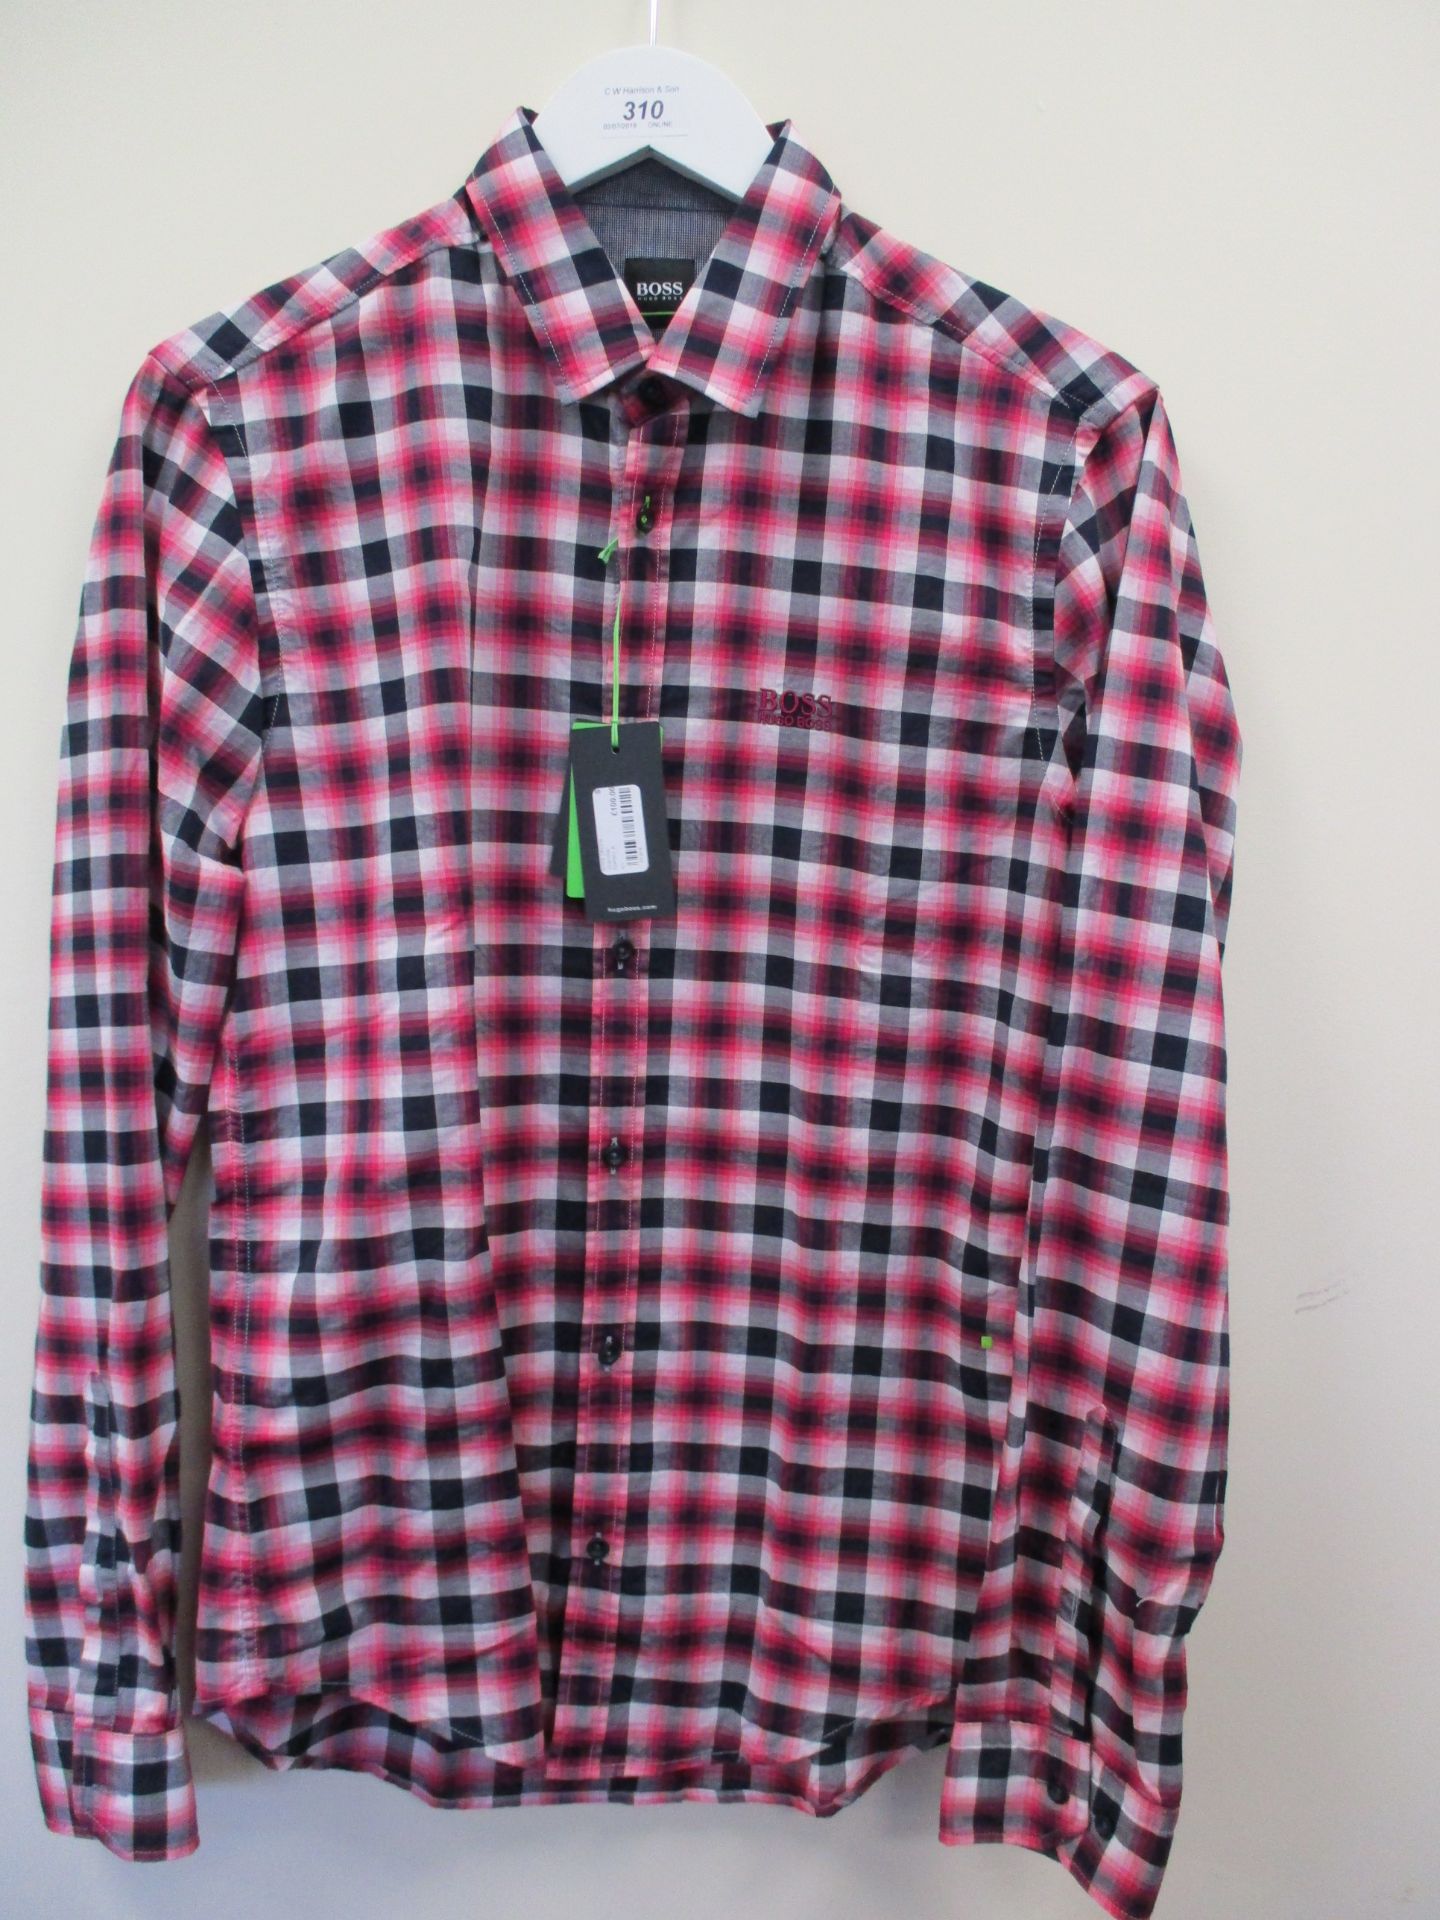 Hugo Boss pin stripe long sleeve shirt - pink check - small RRP £100